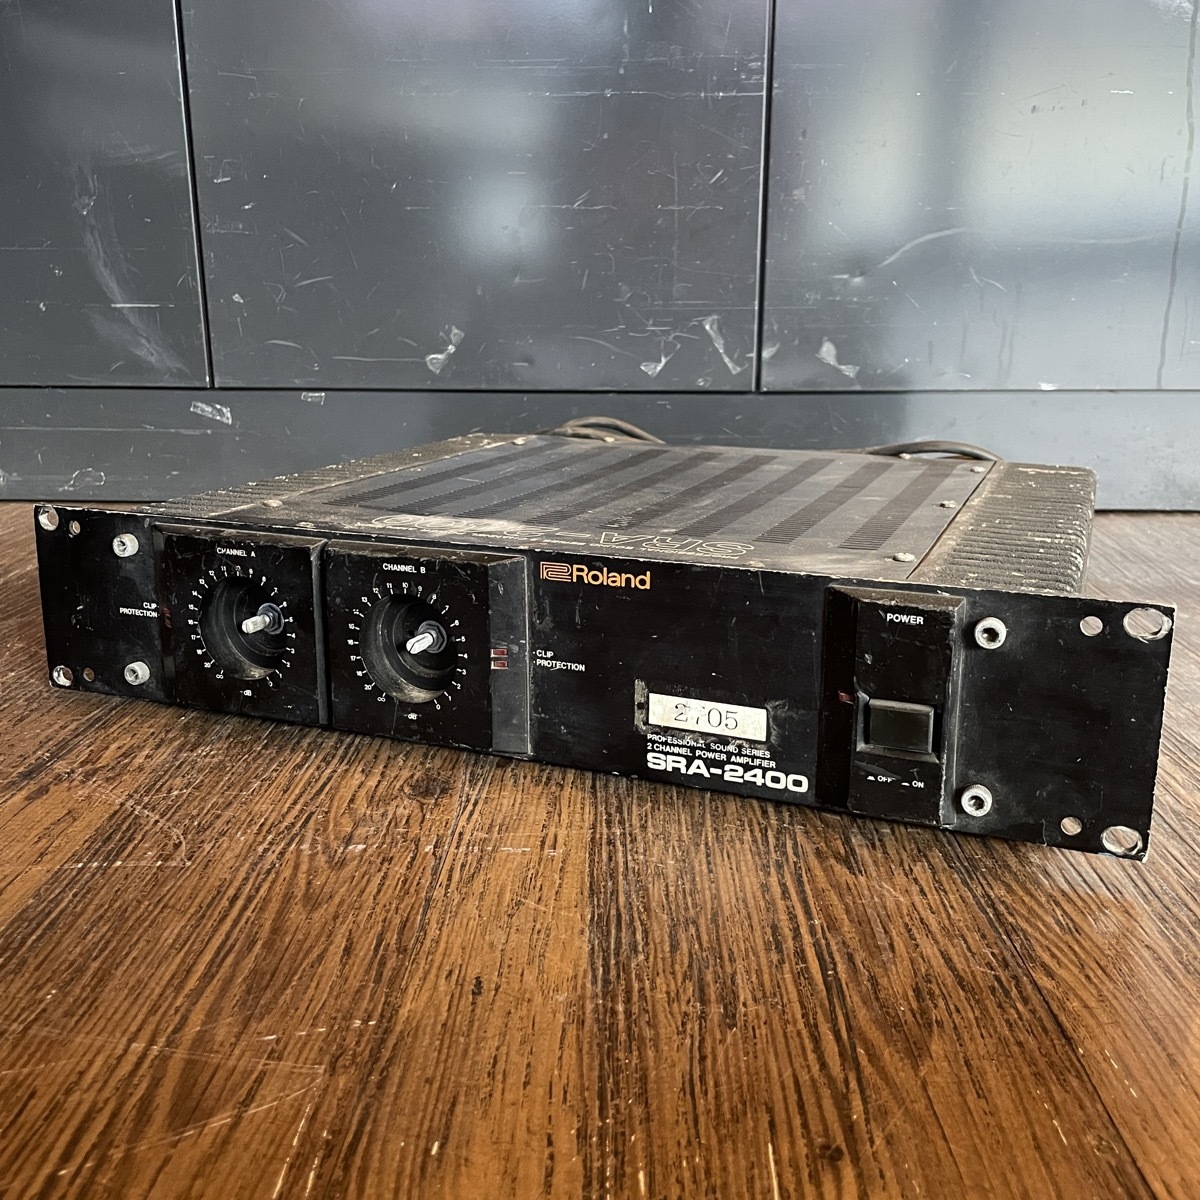 Roland SRA-2400 Power Amplifier パワーアンプ ローランド ジャンク -m142_画像1